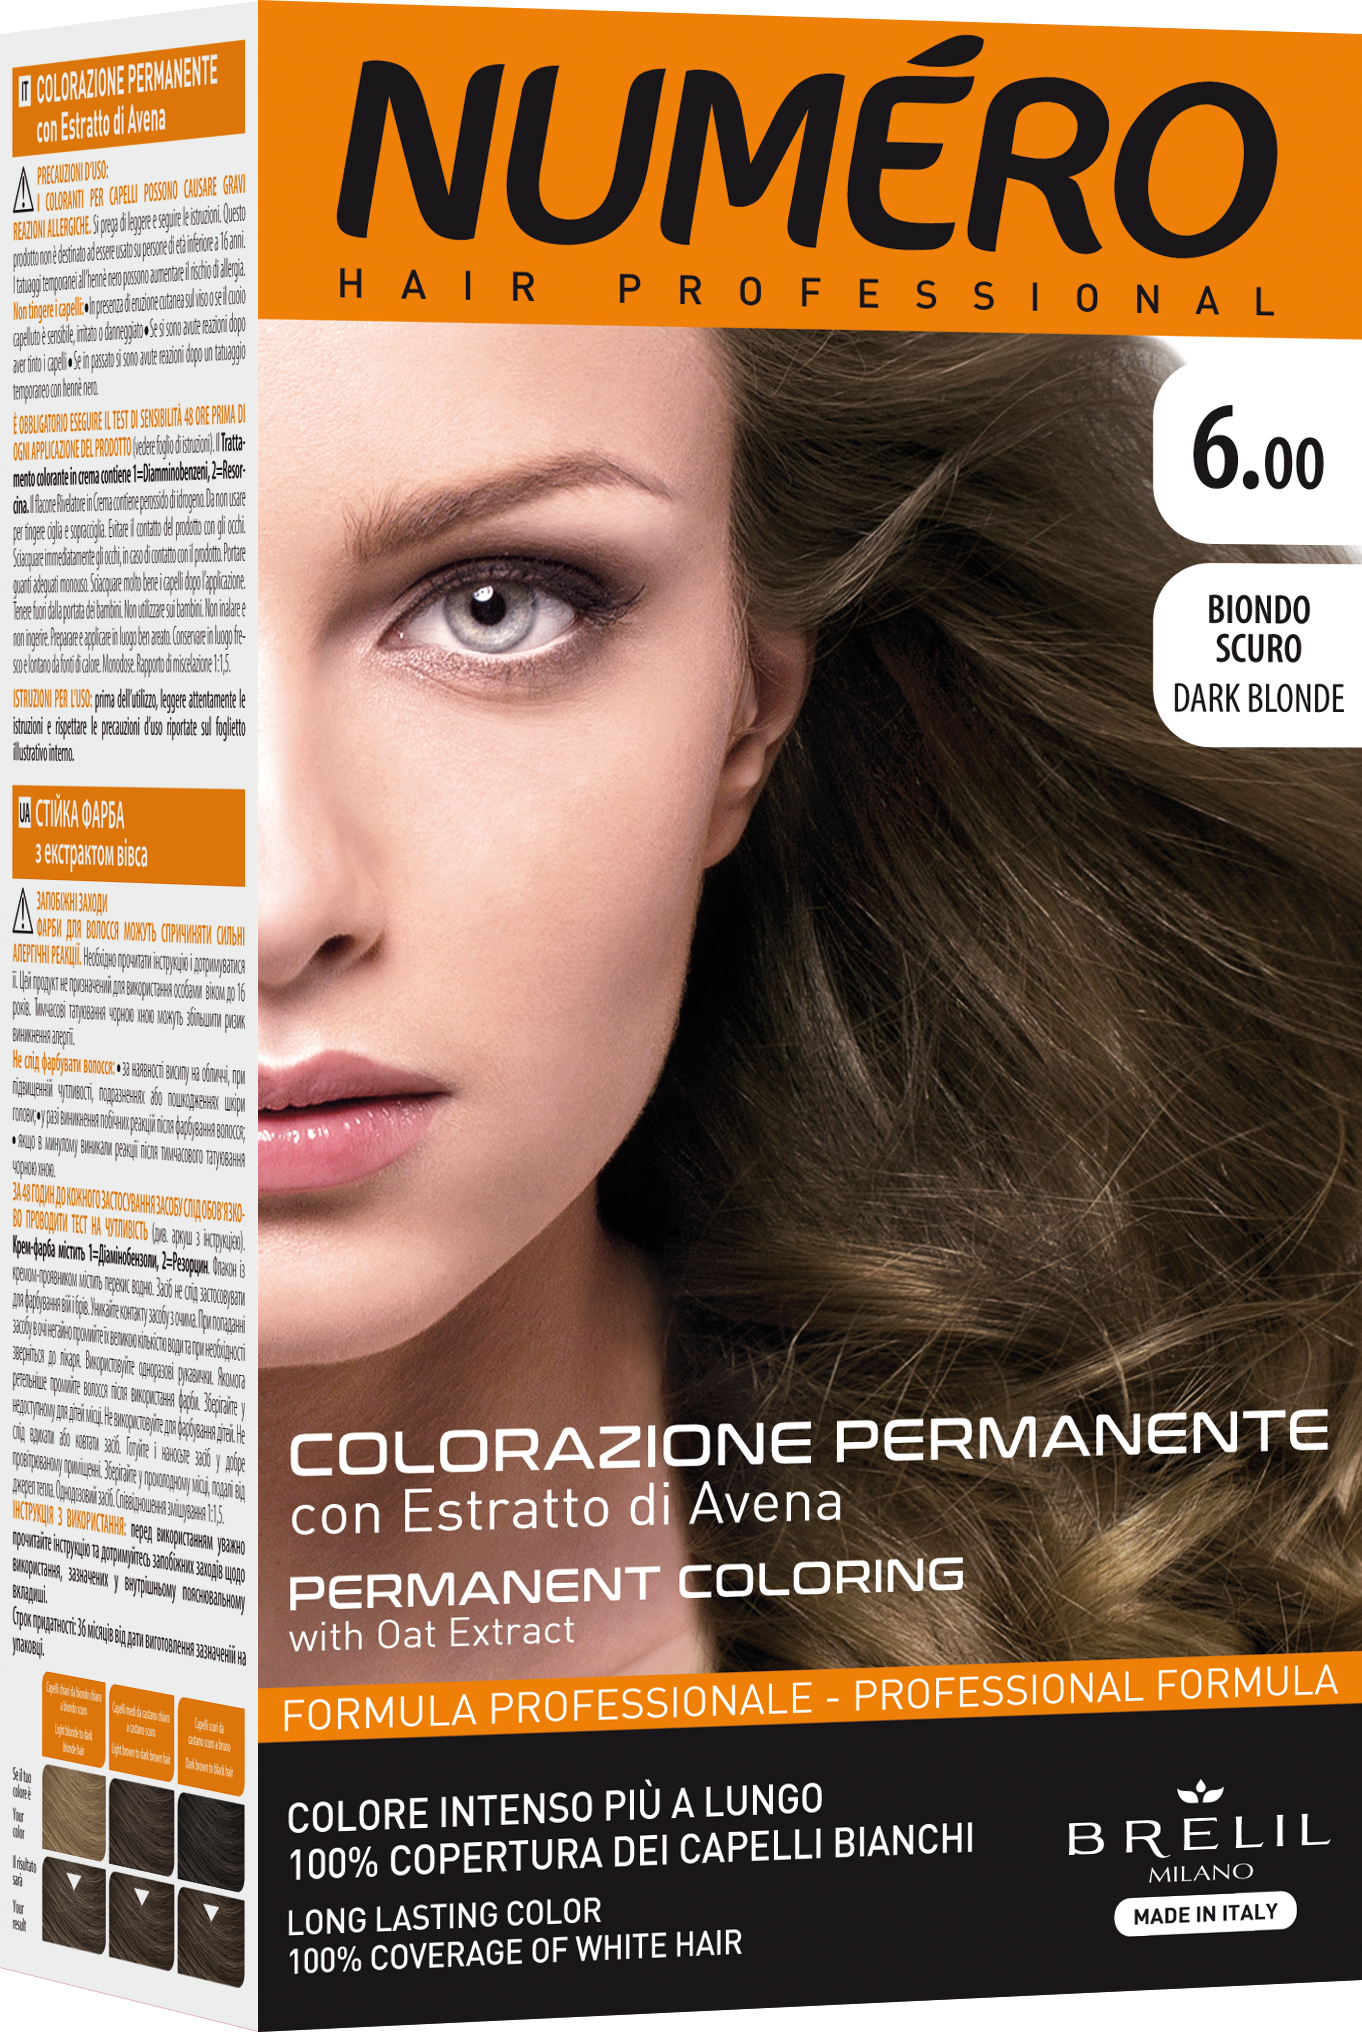 Краска для волос Numero Hair Professional Dark blonde, тон 6.00 (Темный блонд), 140 мл - фото 1